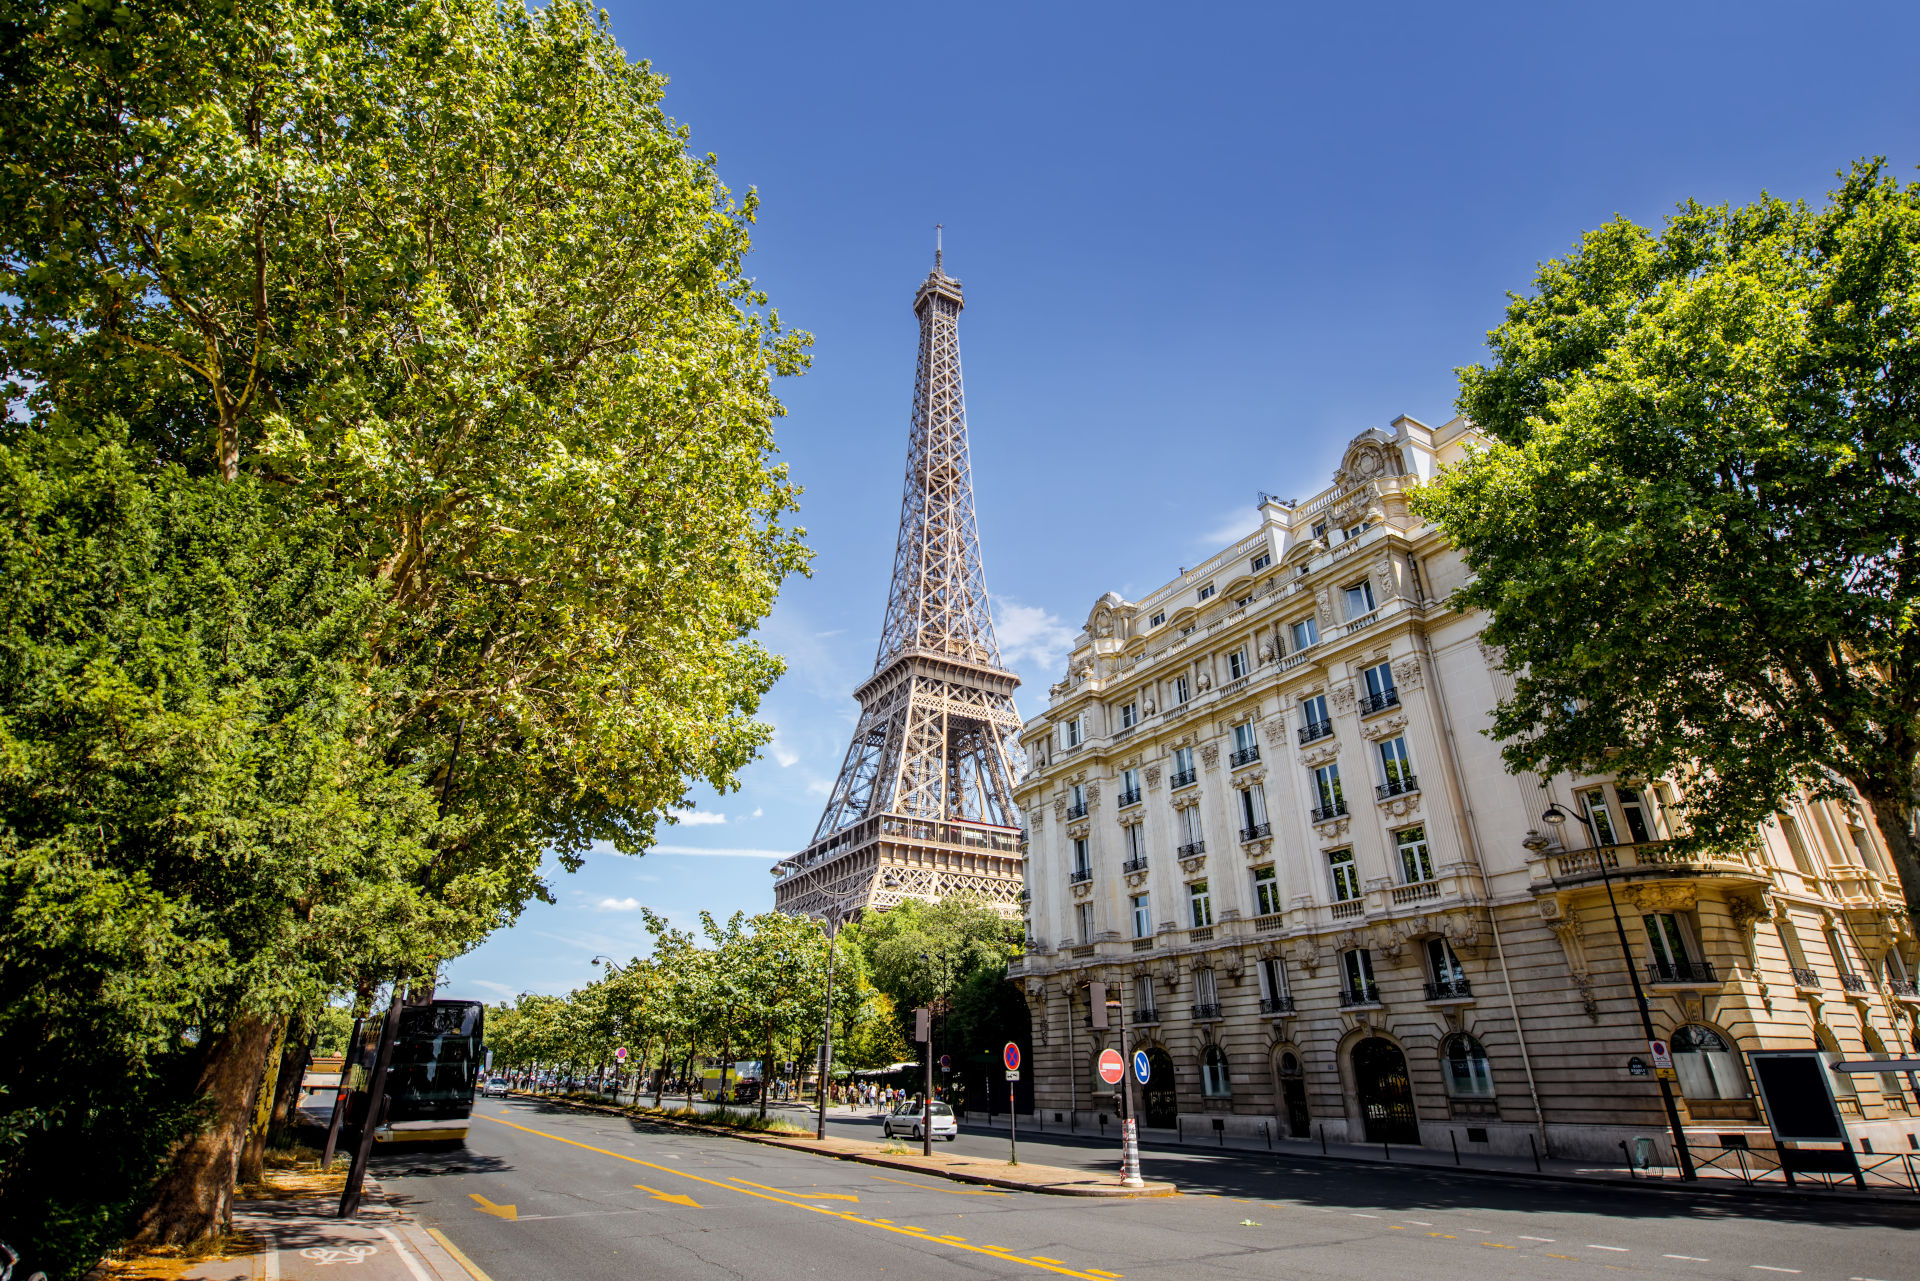 View Of Paris Eiffel Tower From Street Below